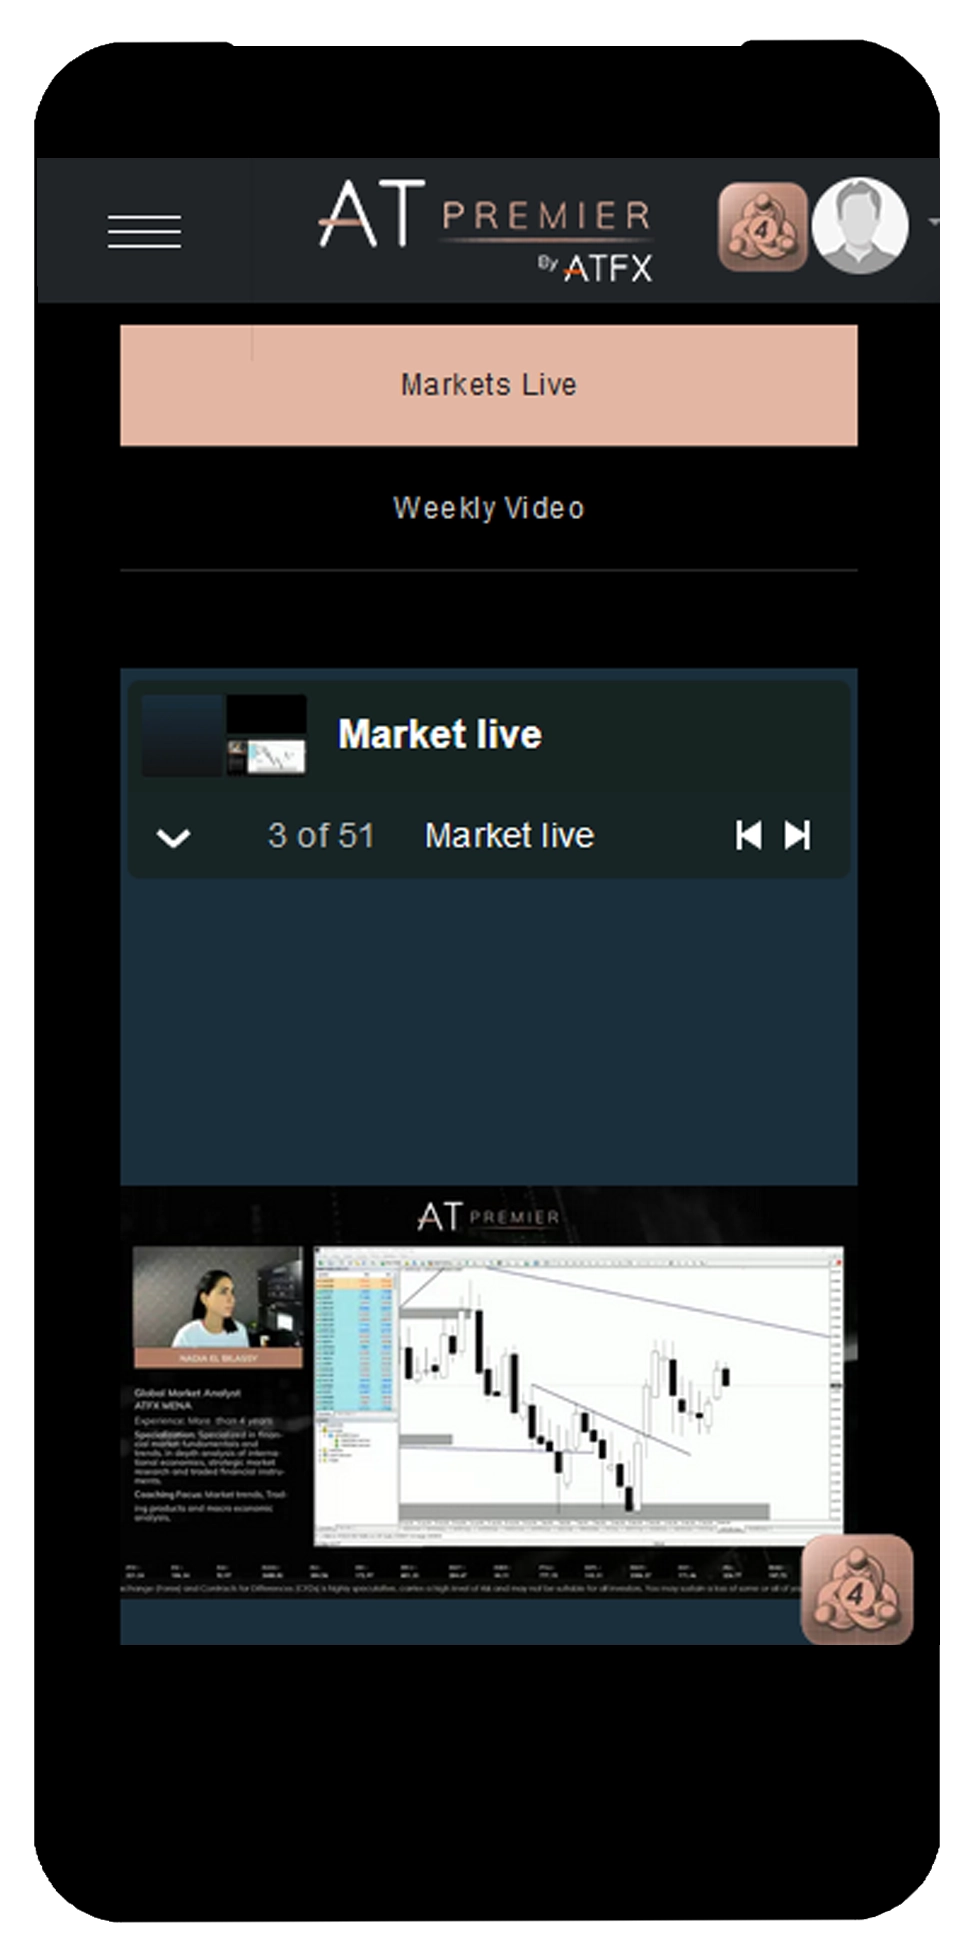 Markets Live